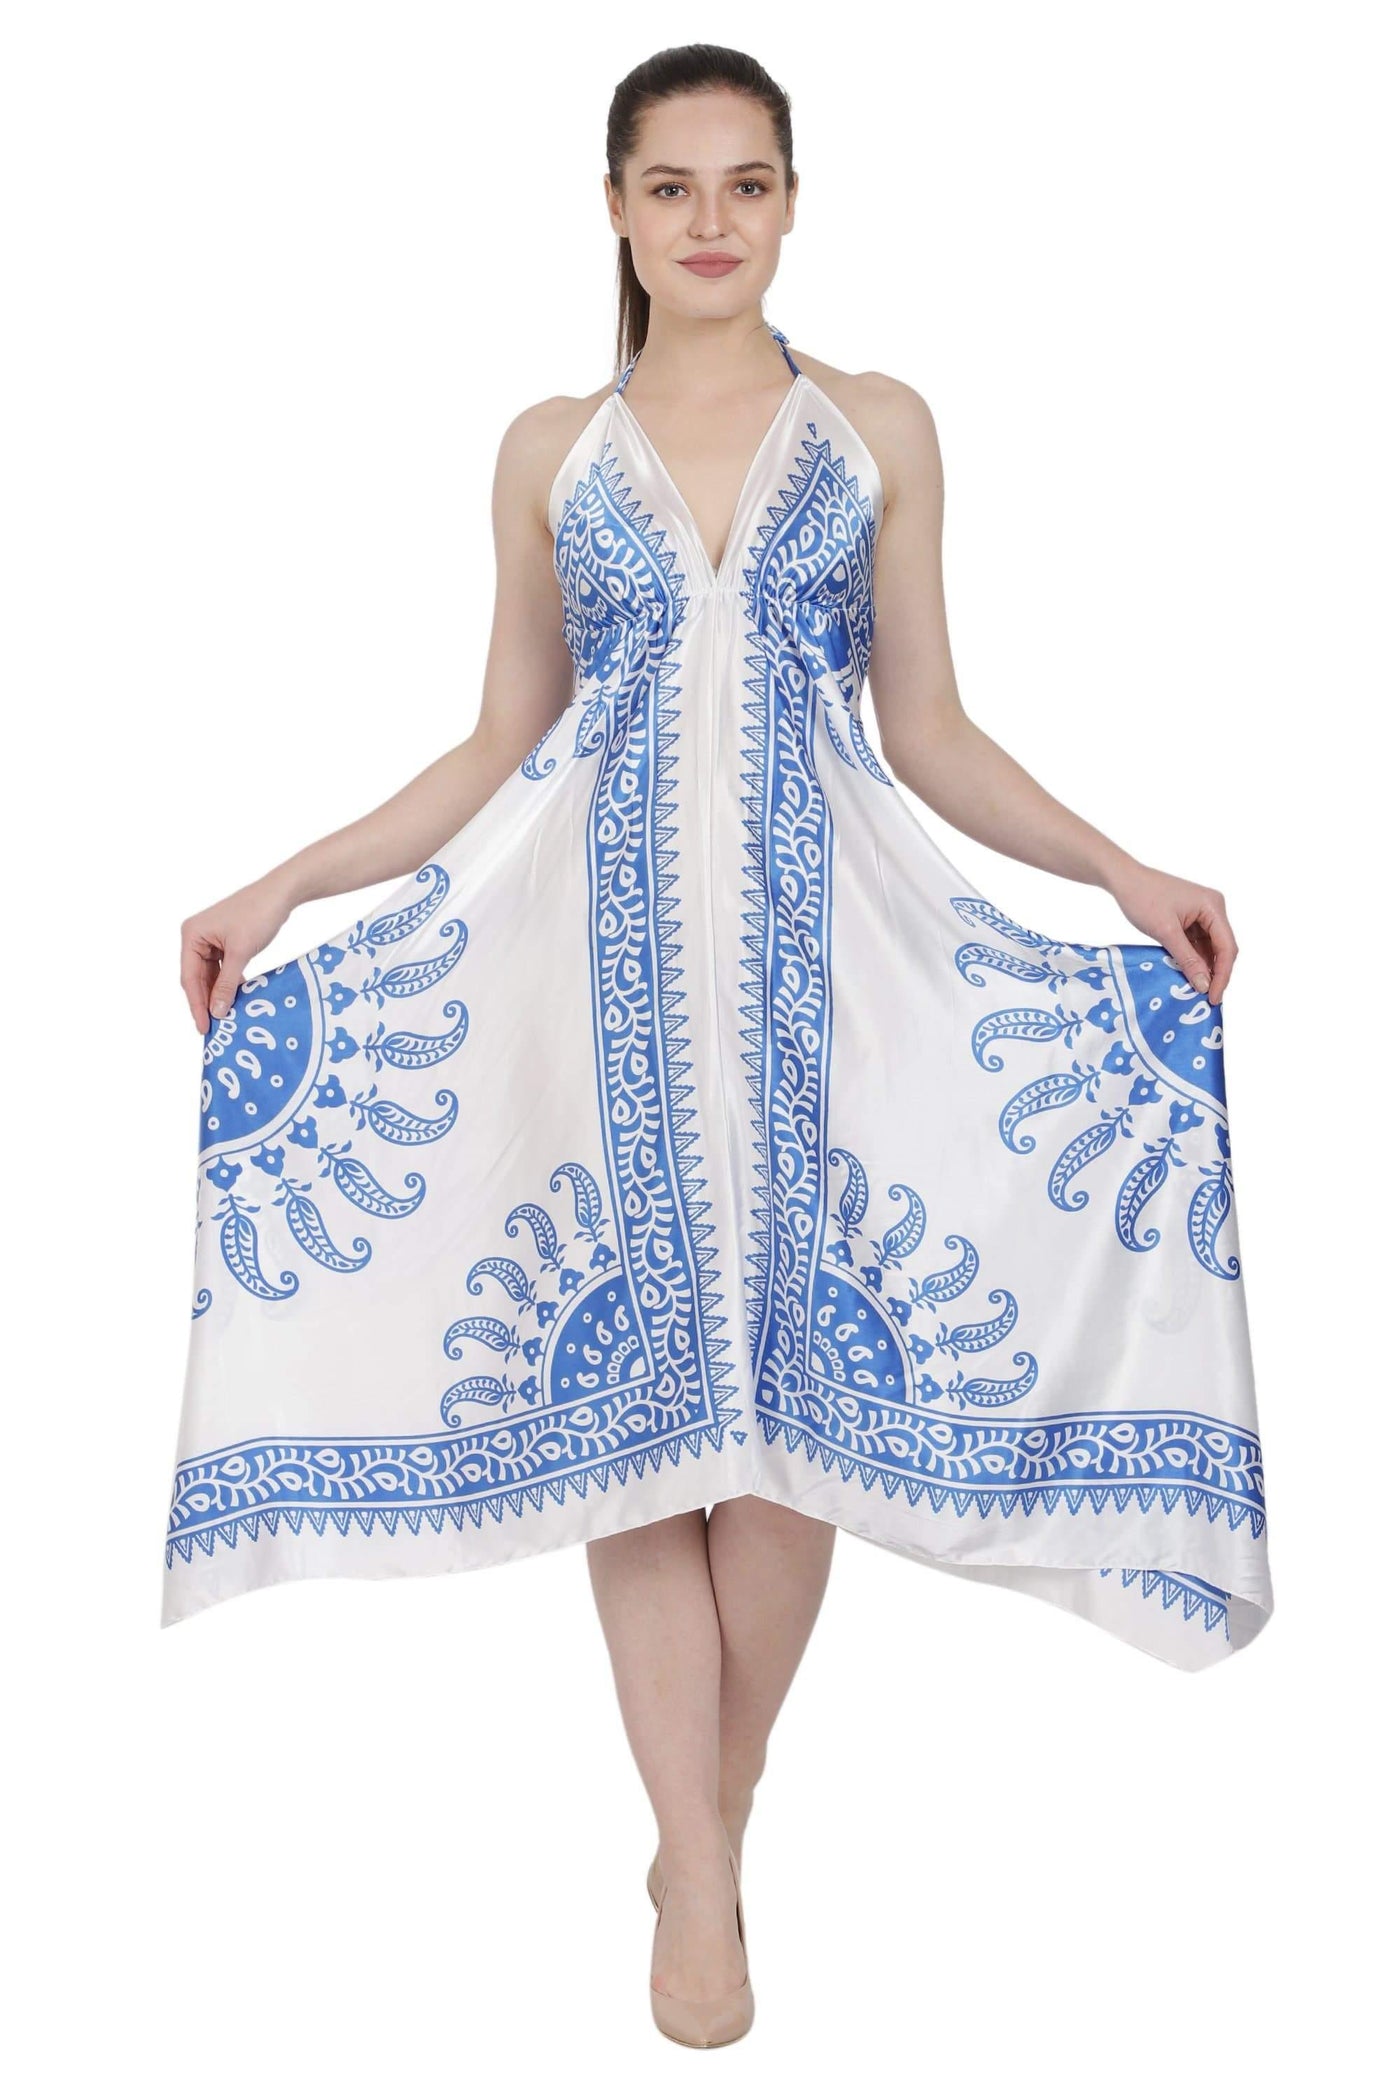 Paisley Print Halter Dress One Size Fits Most S-922  - Advance Apparels Inc